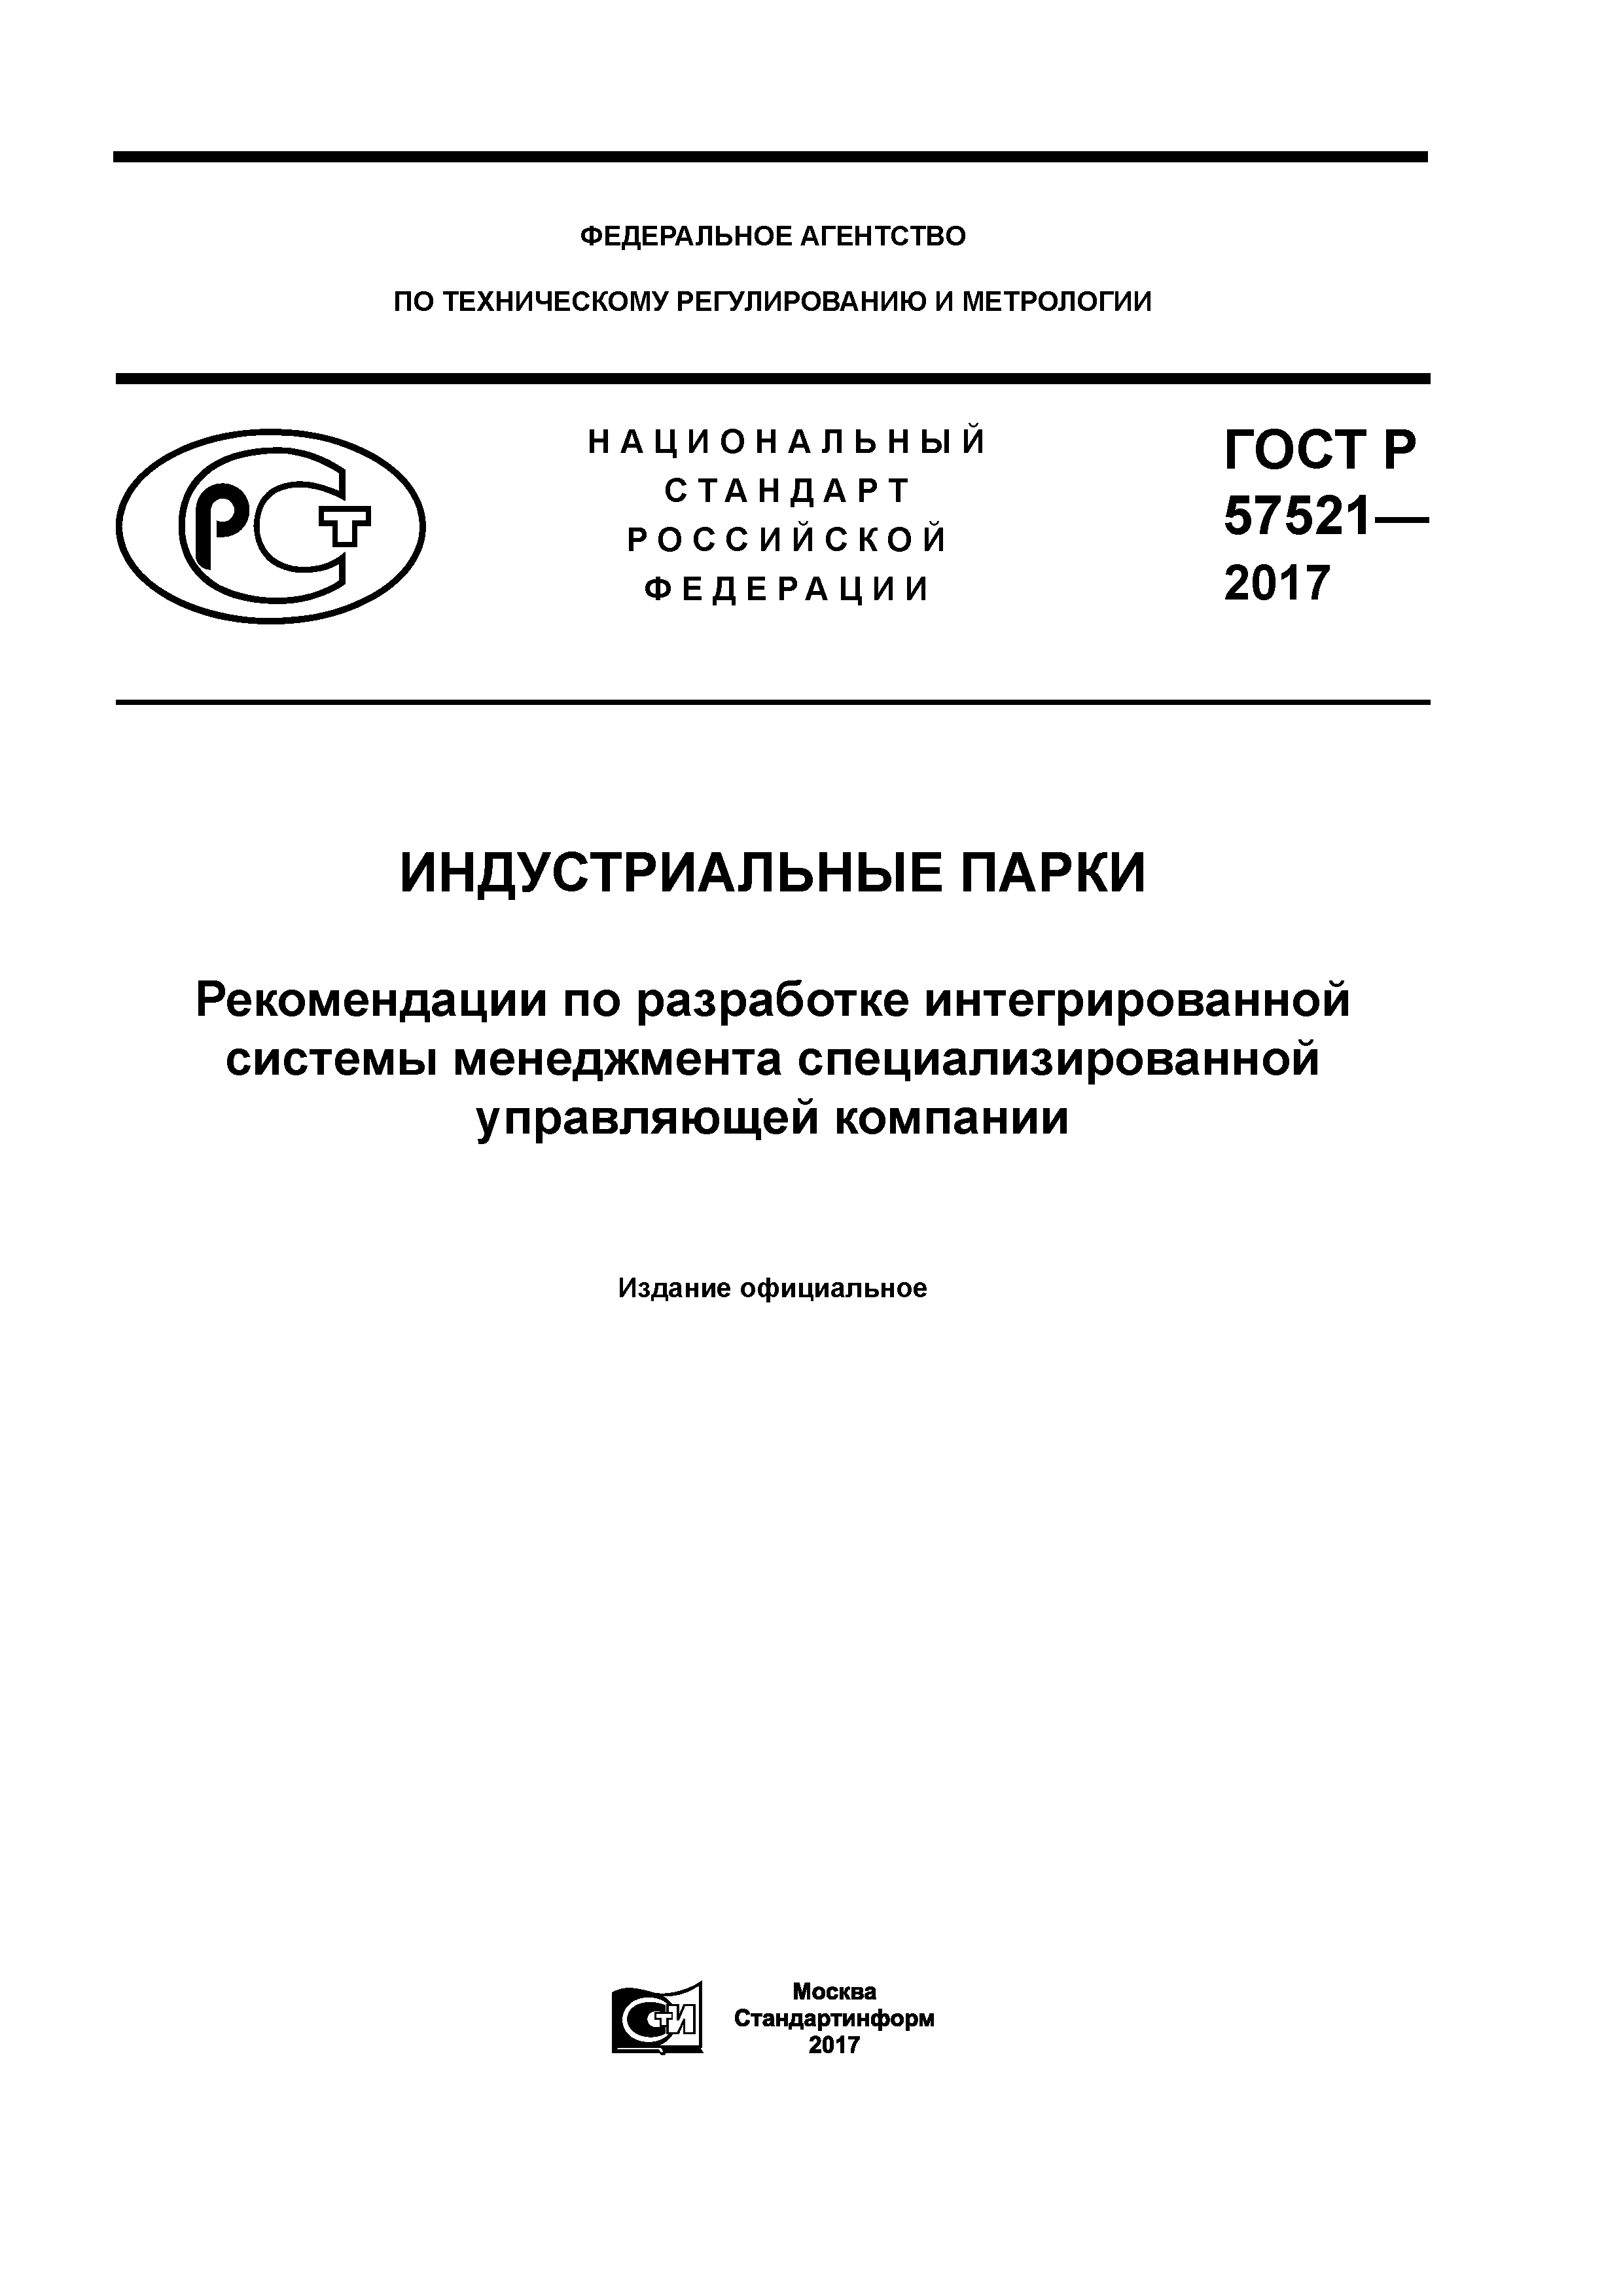 ГОСТ Р 57521-2017